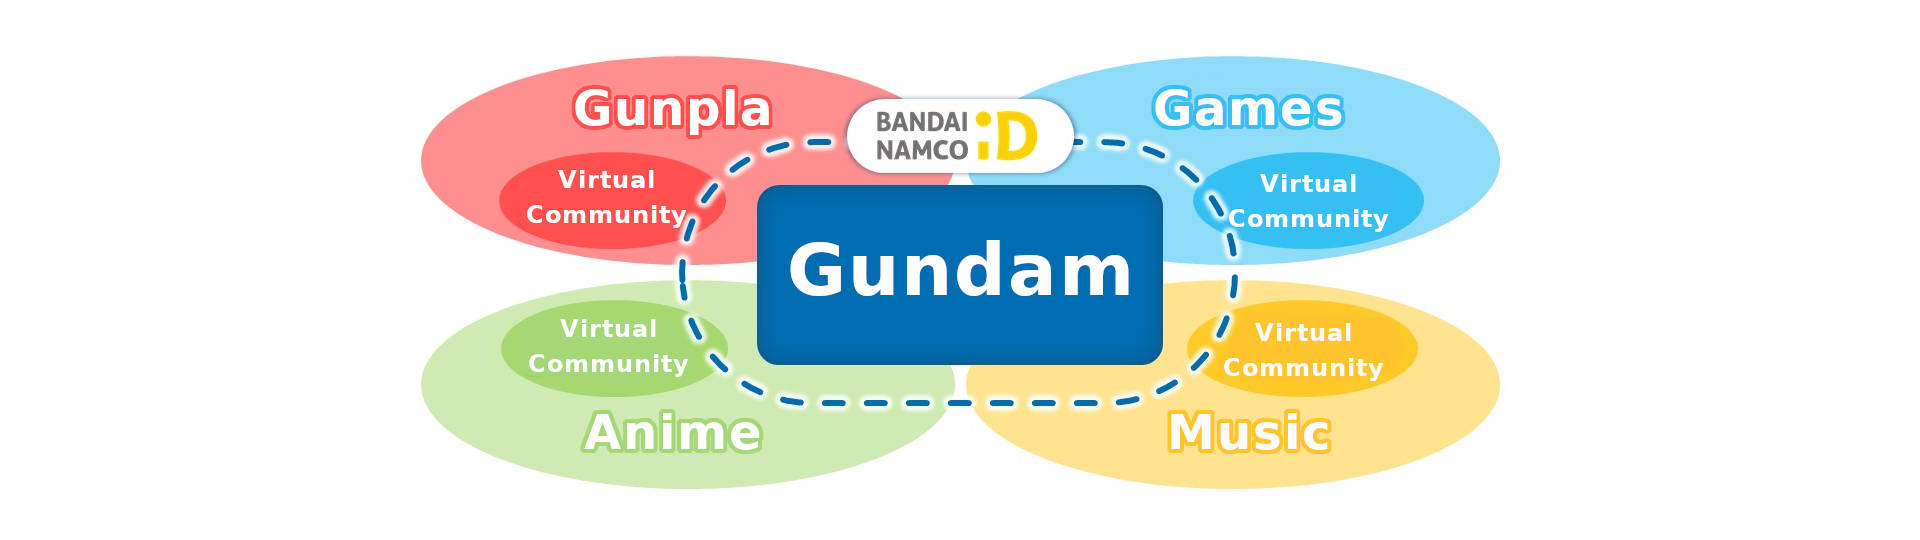 Bandai Namco Gundam Metaverse slice chart b